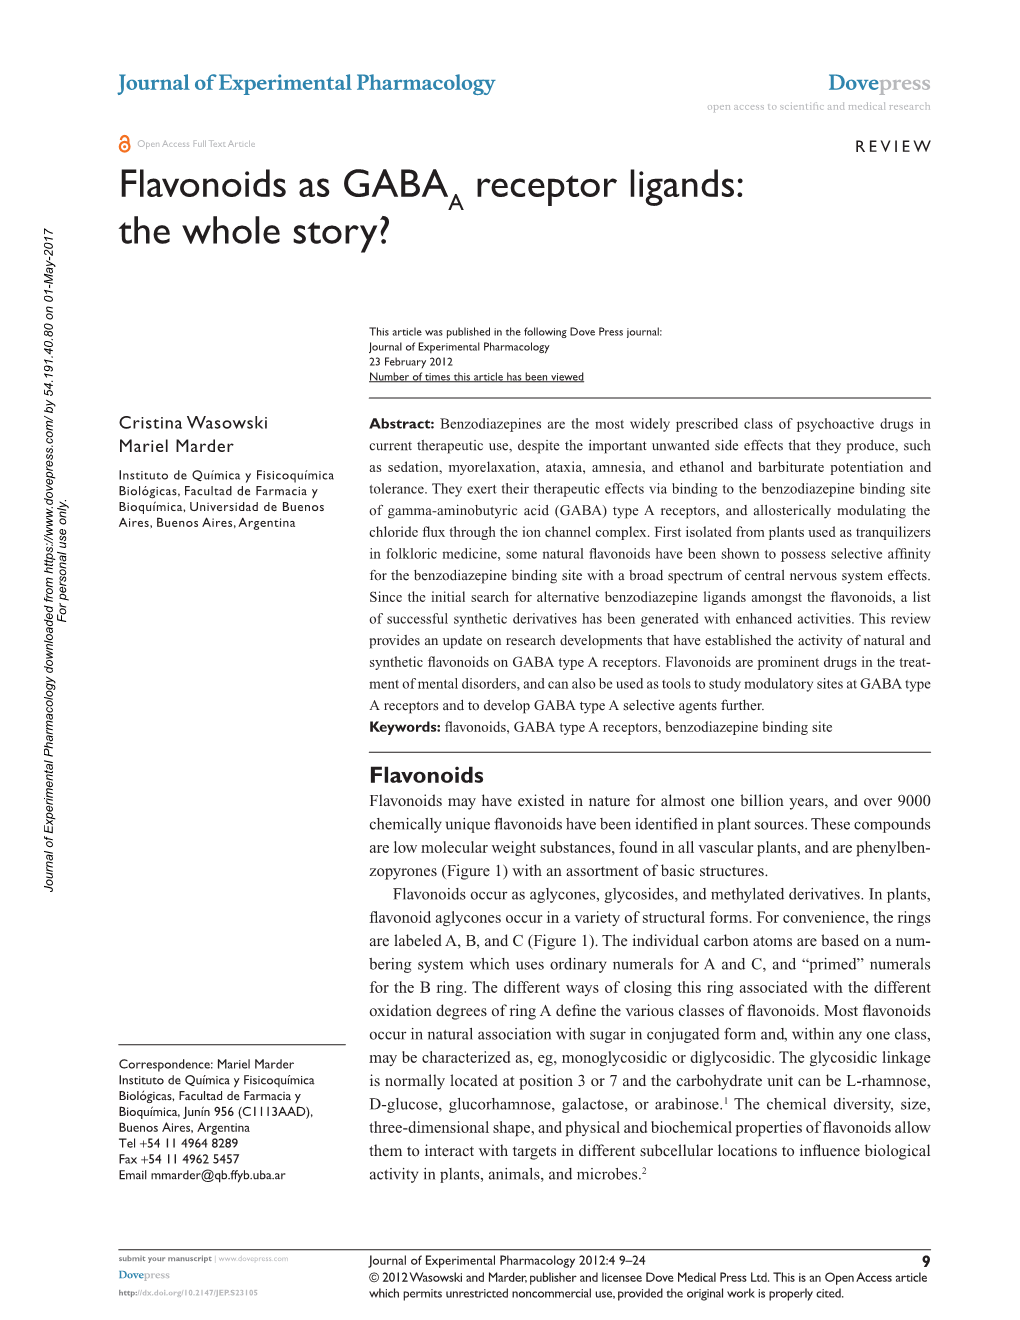 Flavonoids As GABA Receptor Ligands